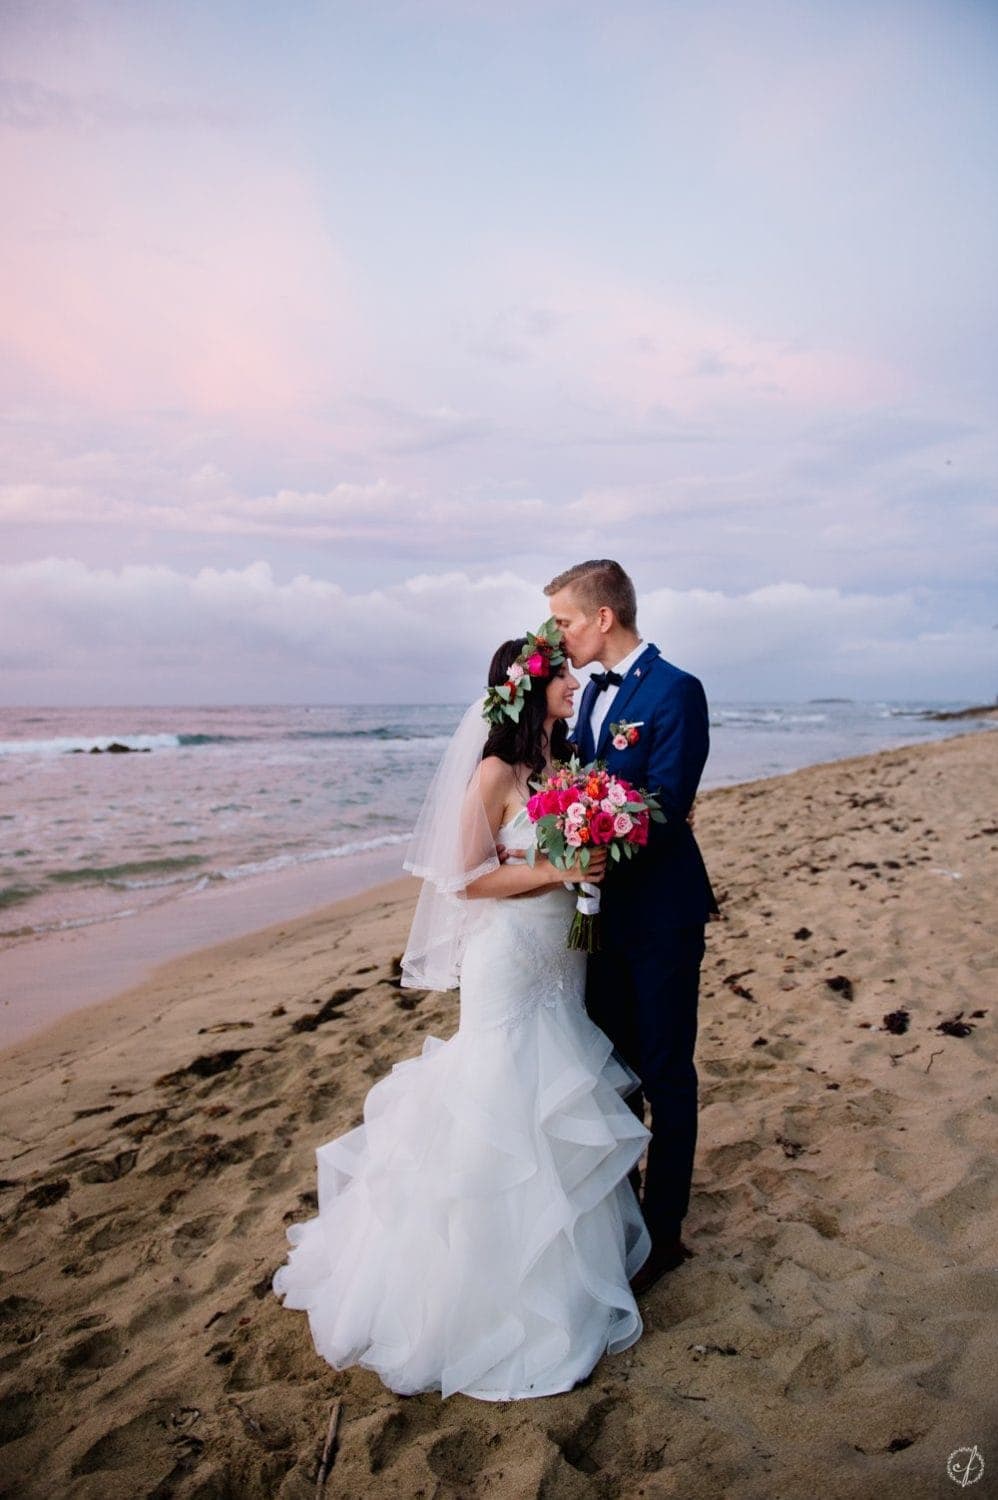 Old San Juan Beach destination wedding photography by Camille Fontanez